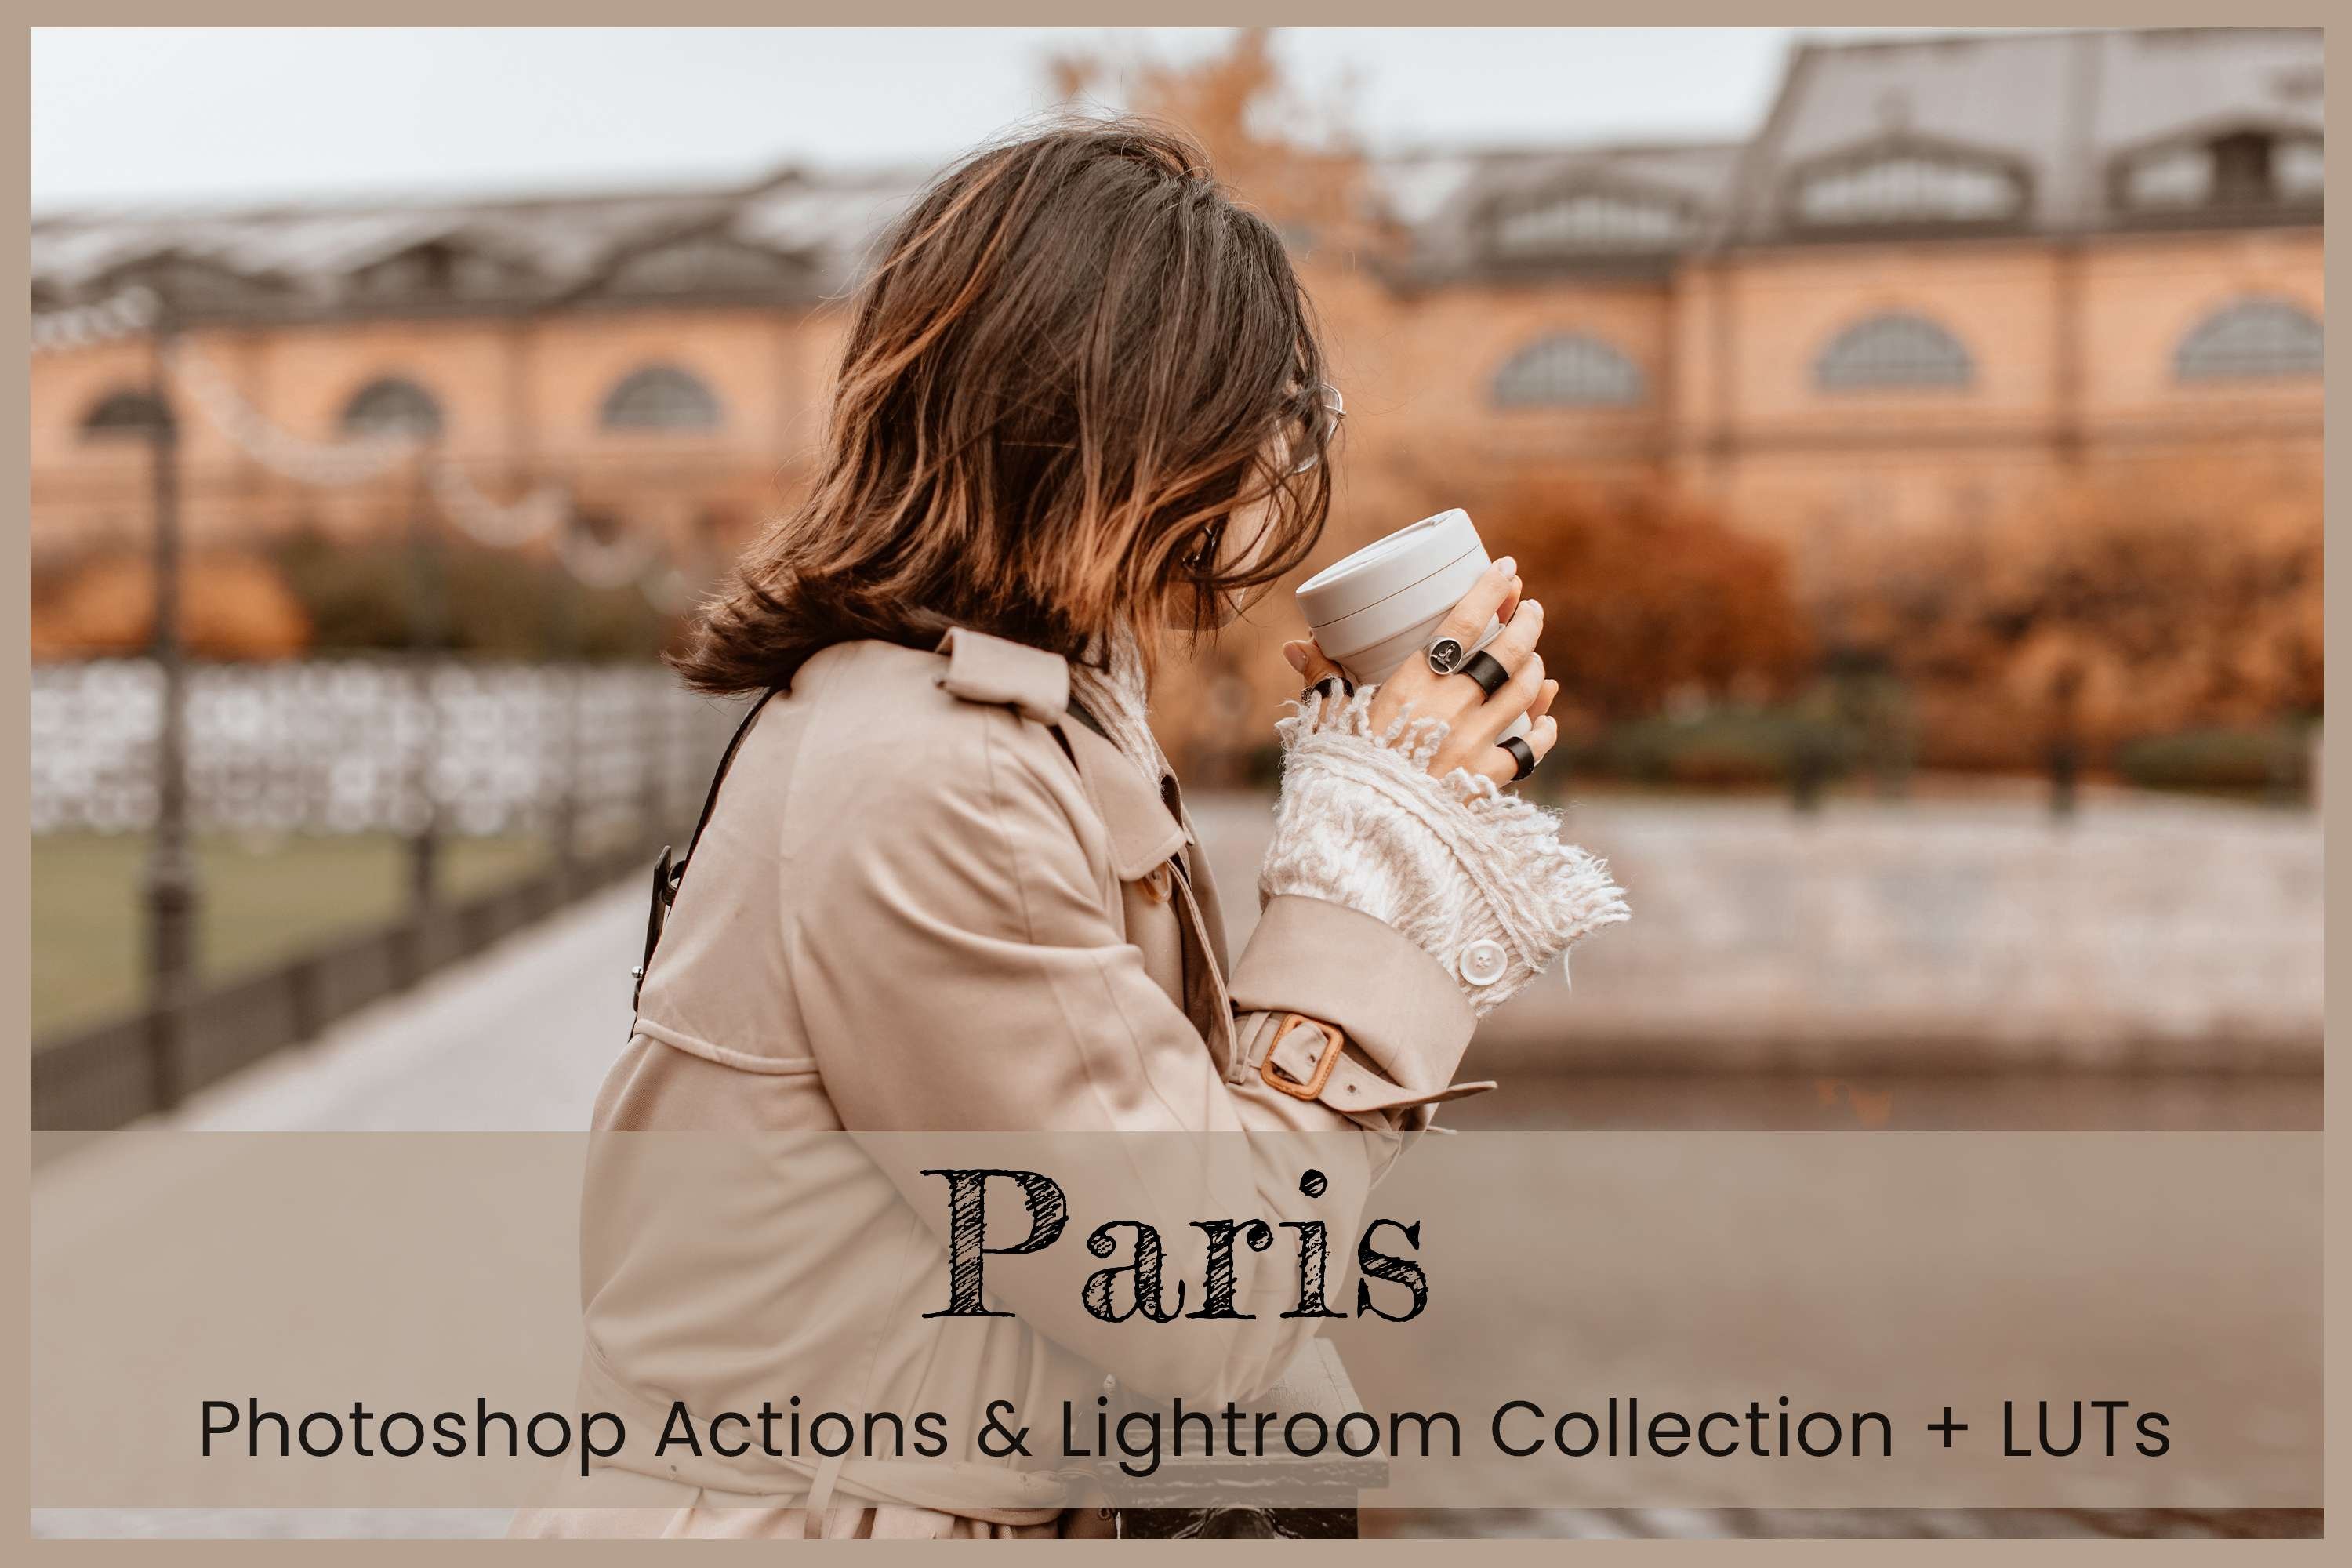 Paris Chic Photoshop Actions LUTscover image.